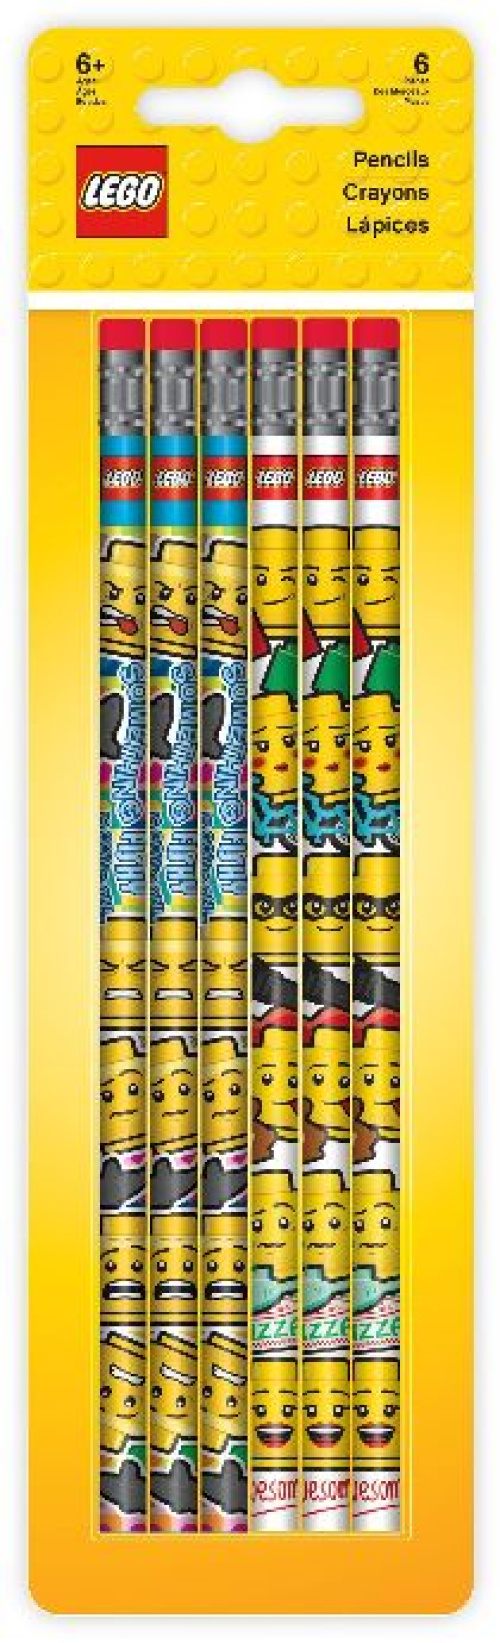 5005578-1 LEGO Pencils 6 pack